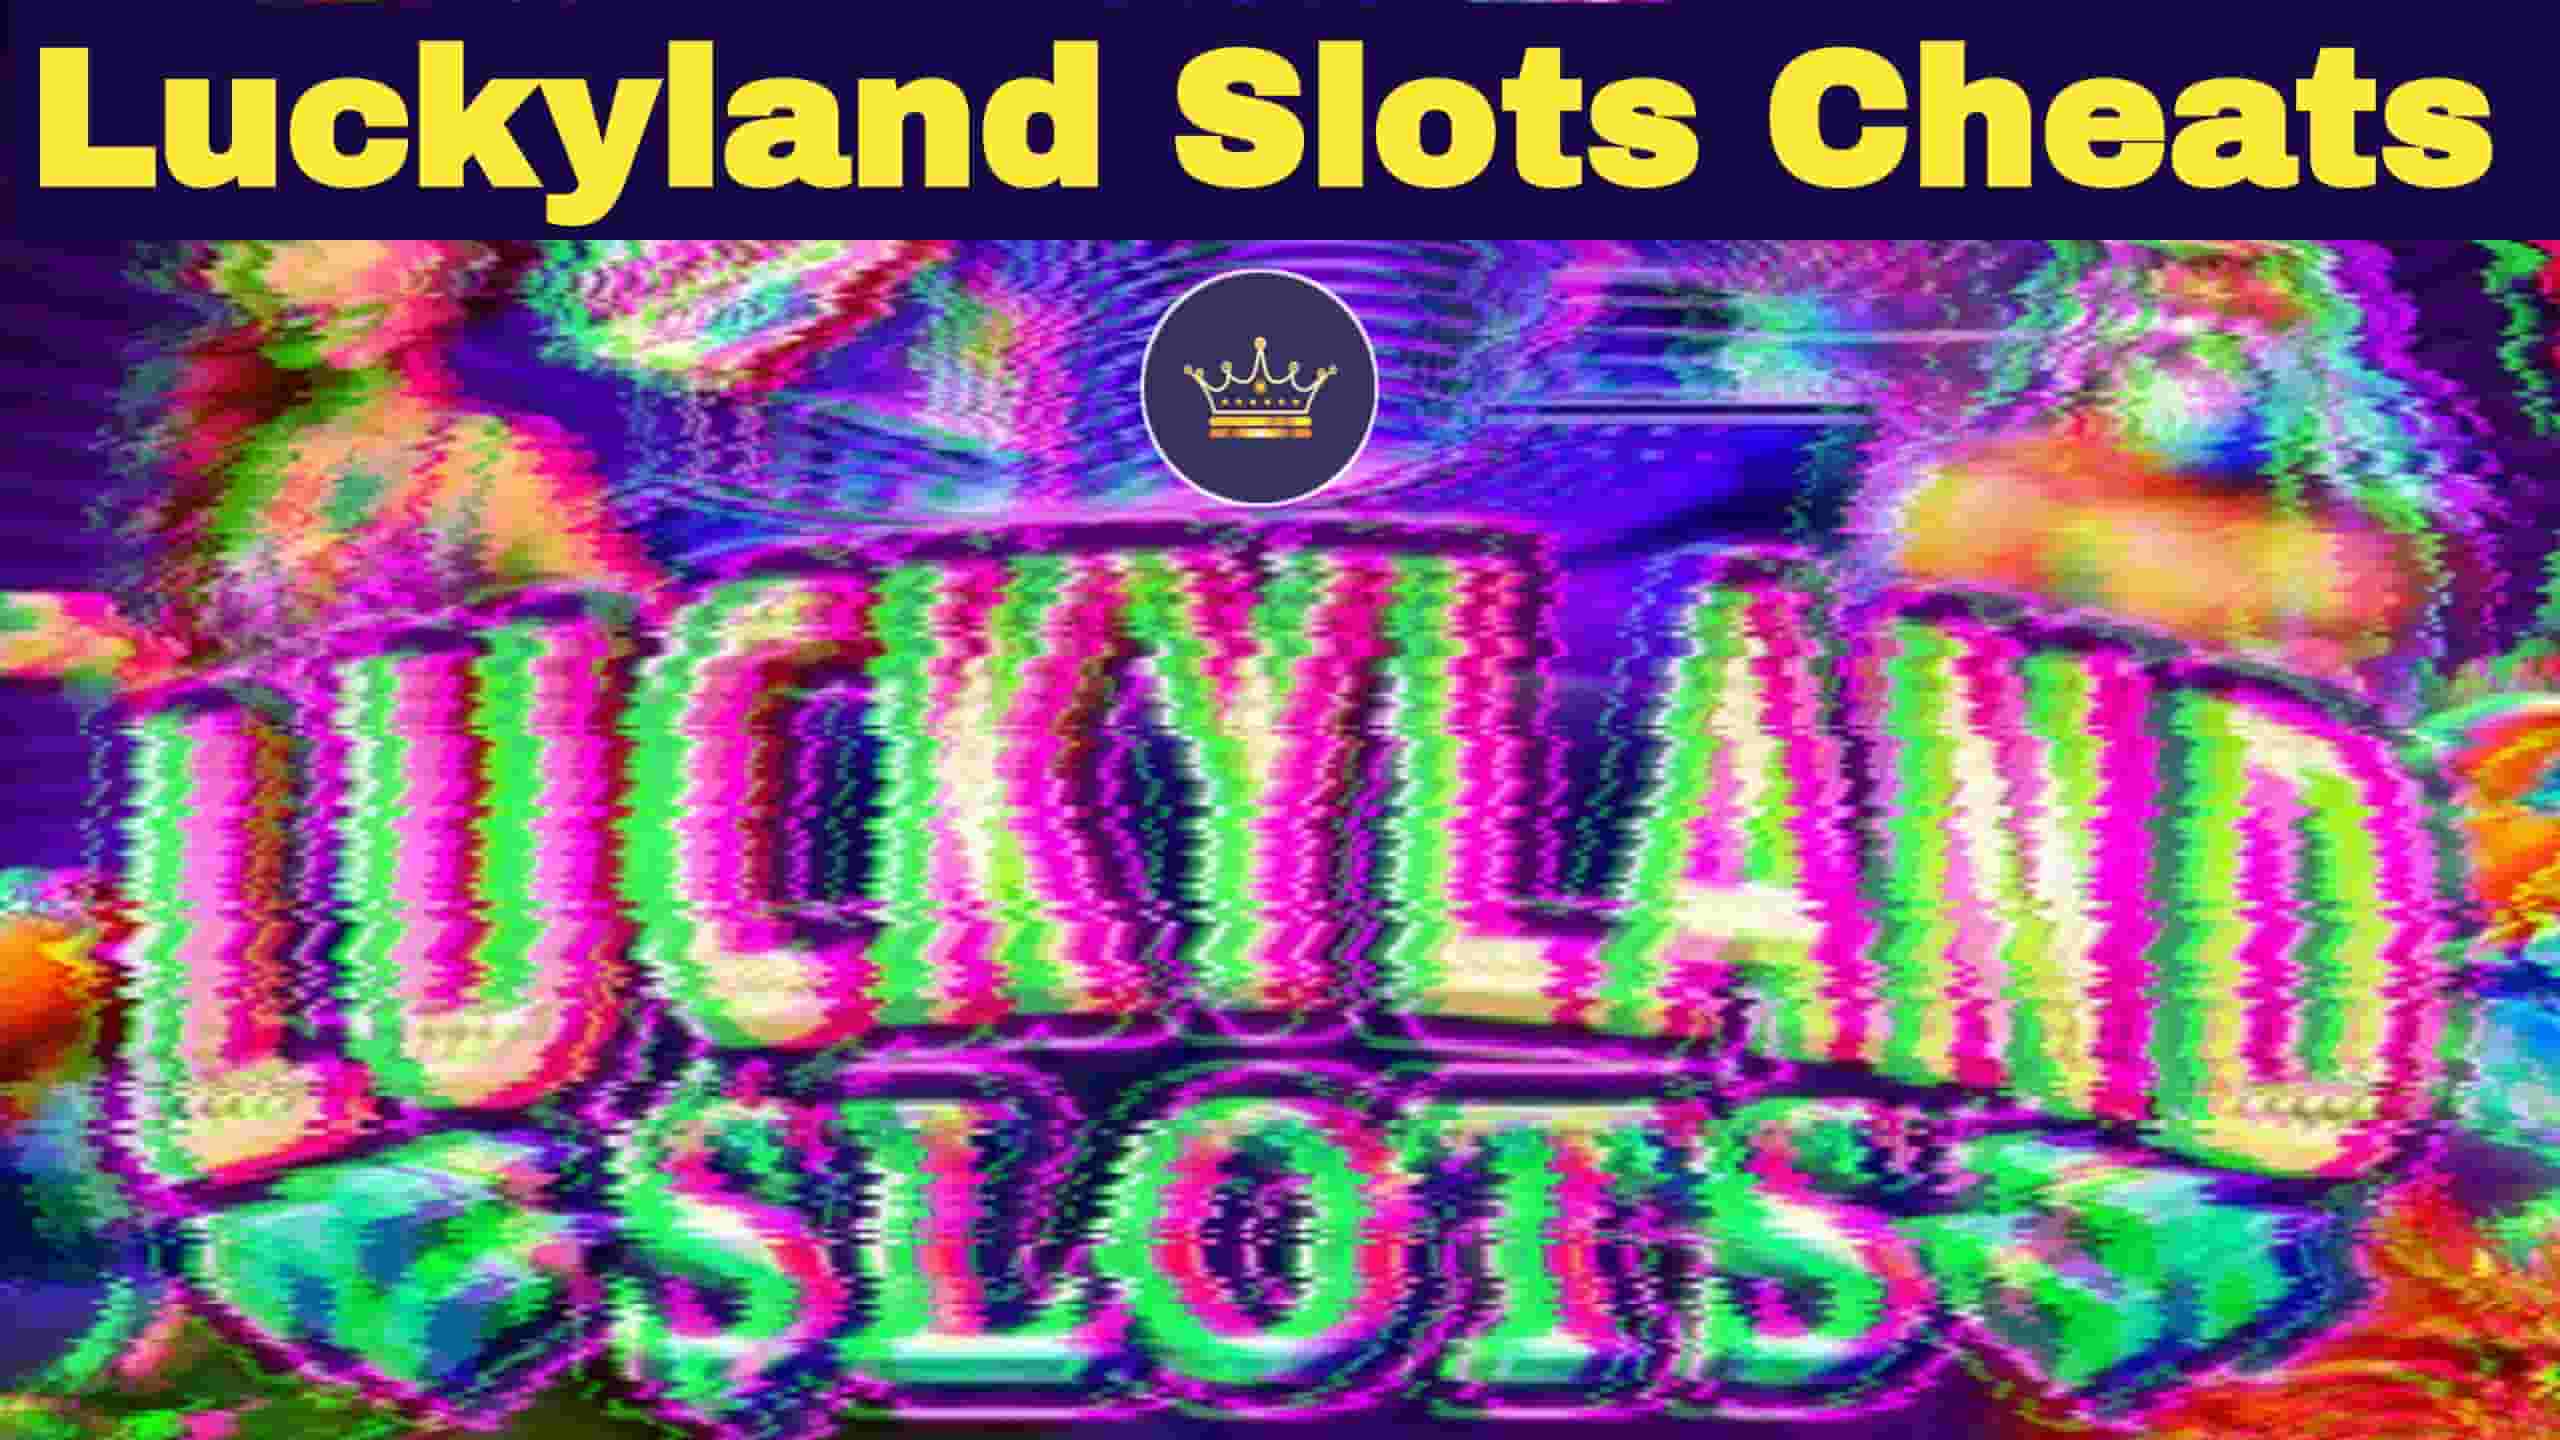 LuckyLand Slots Cheats